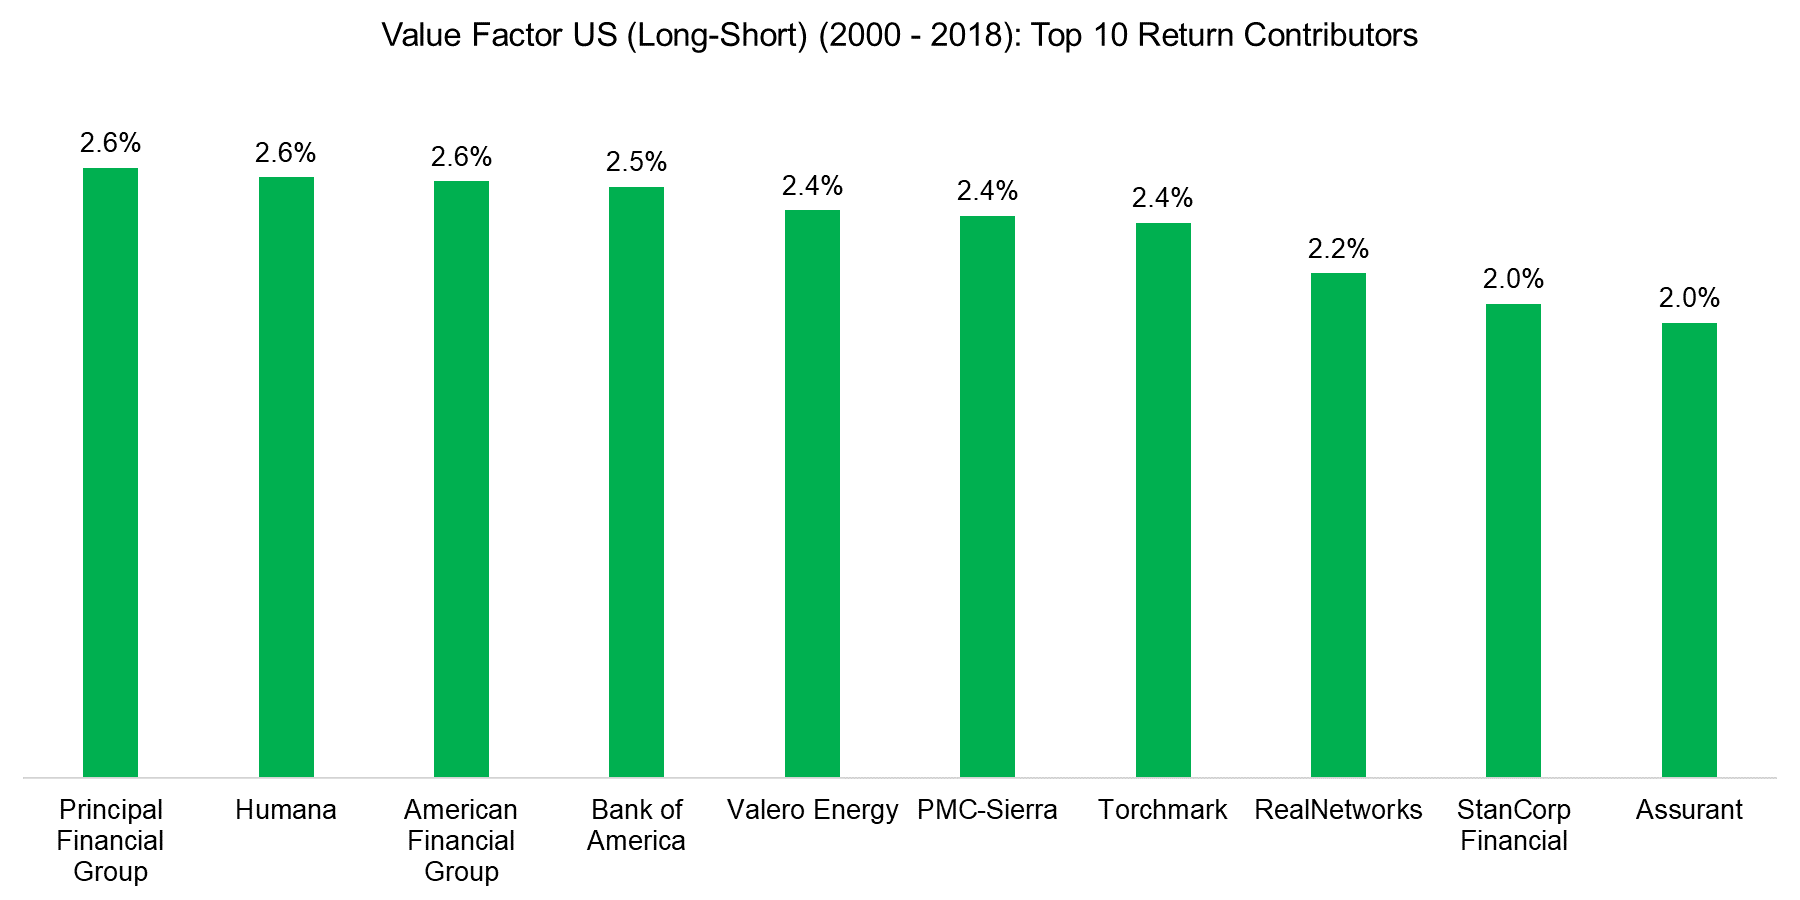 Value Factor US (Long-Short) (2000 - 2018) Top 10 Return Contributor